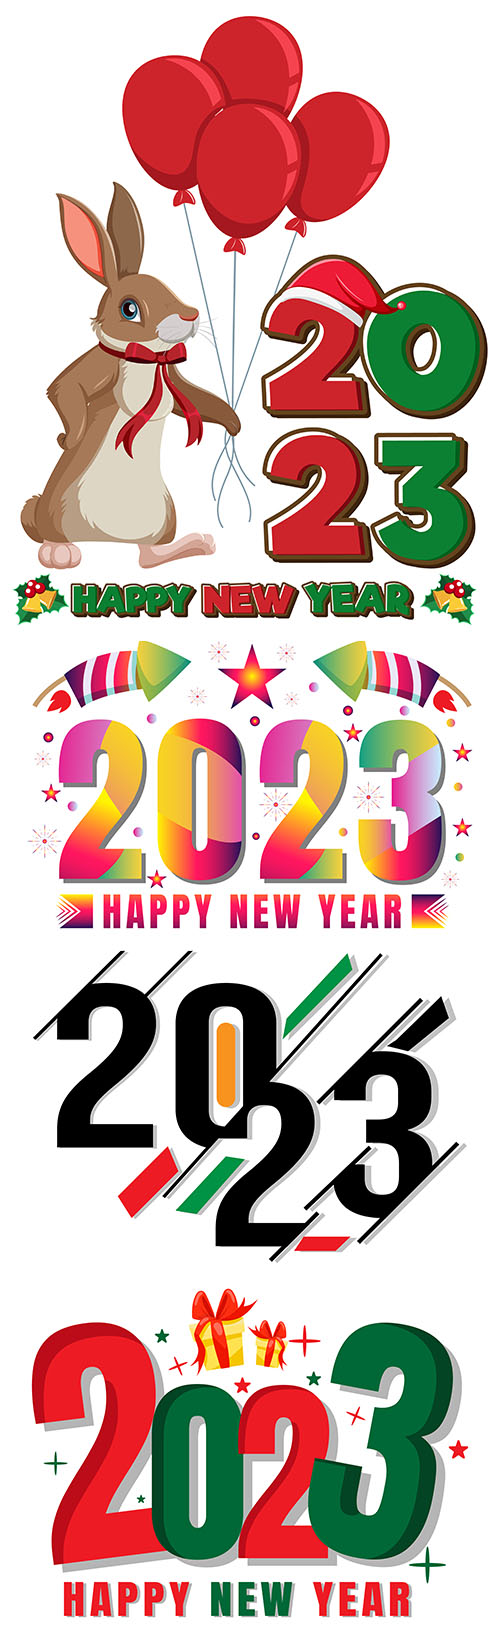 Happy new year 2023 background vector design